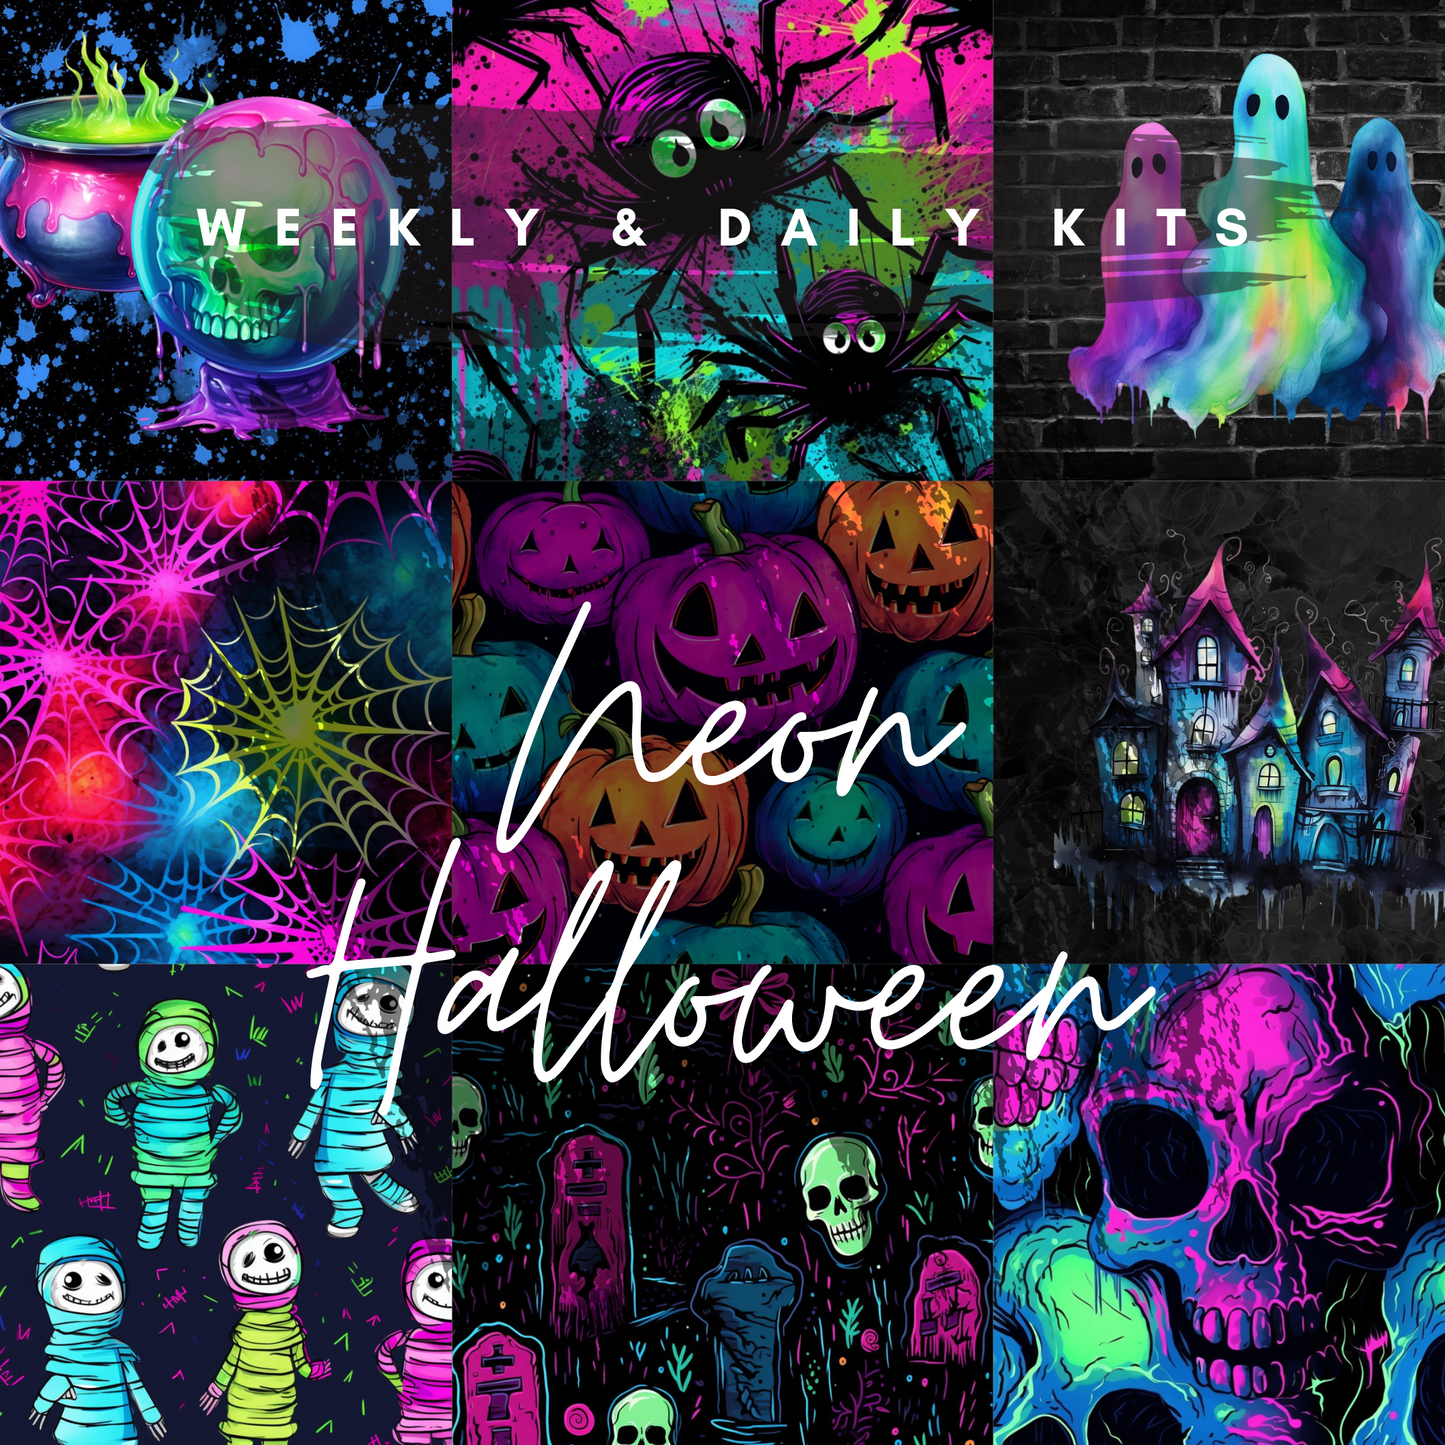 Daily & Weekly Kit / Neon Halloween